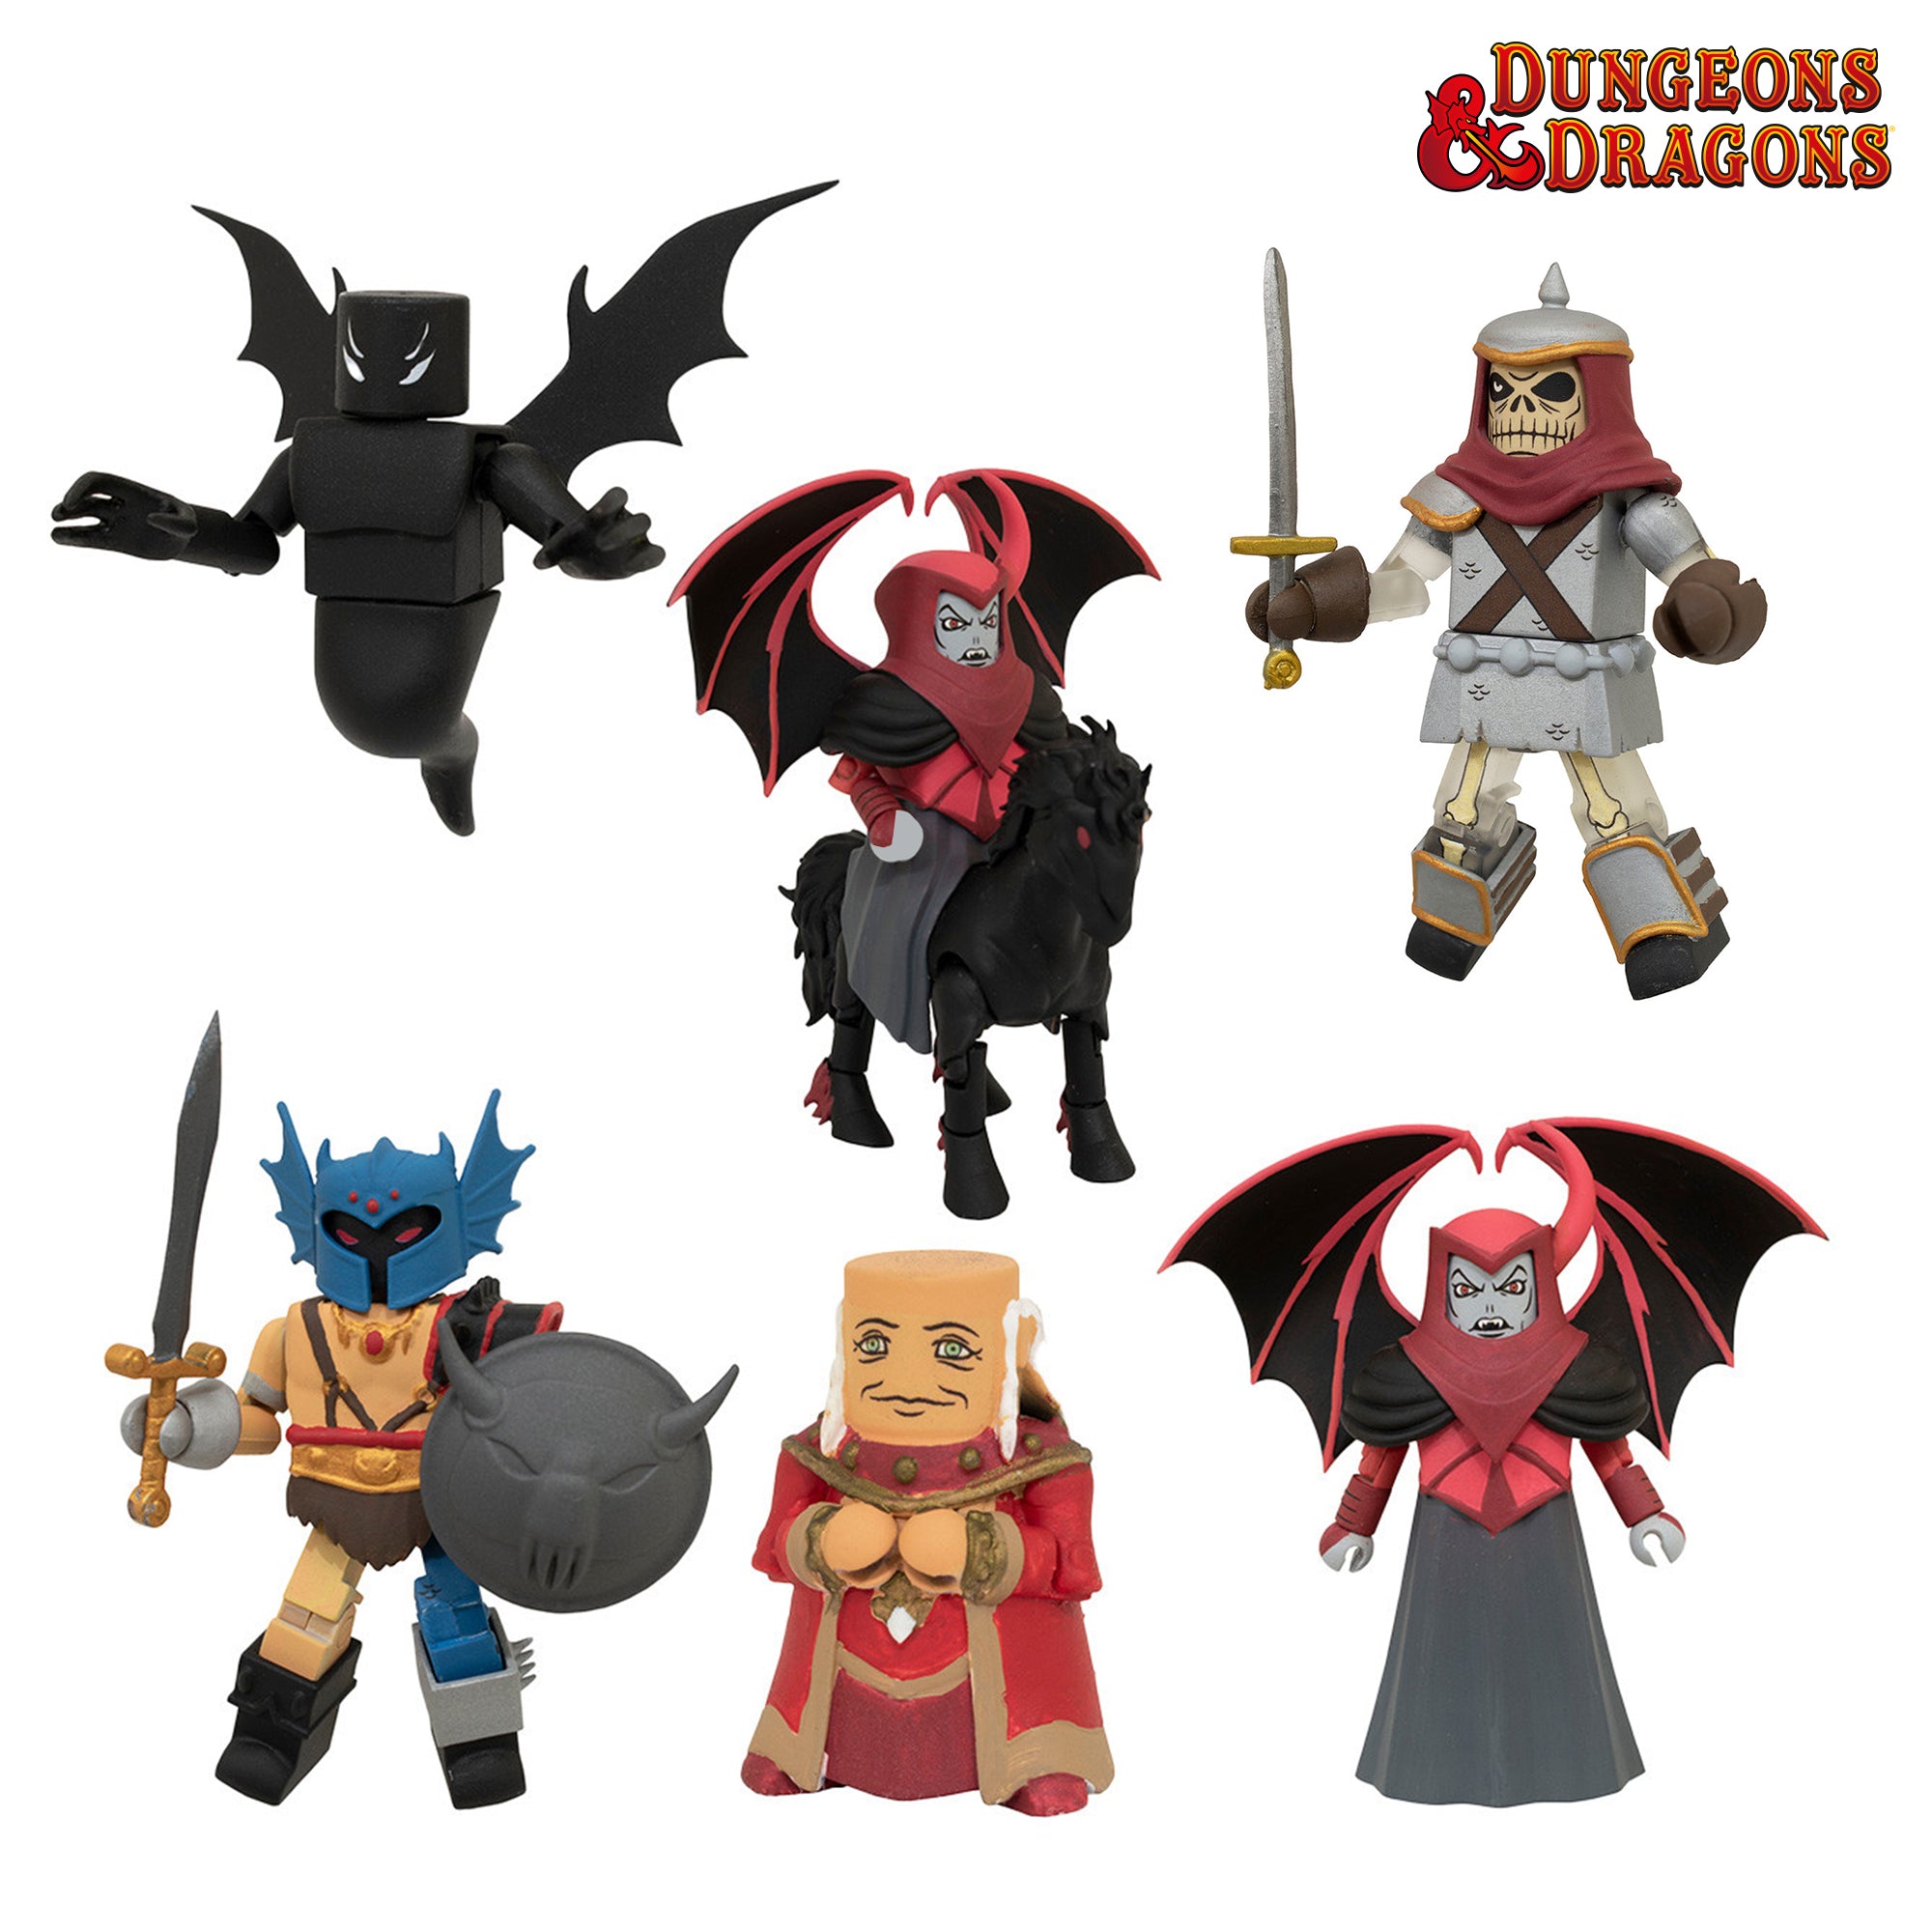 Dungeons & Dragons Minimates Villains Deluxe Box Set (Series 2